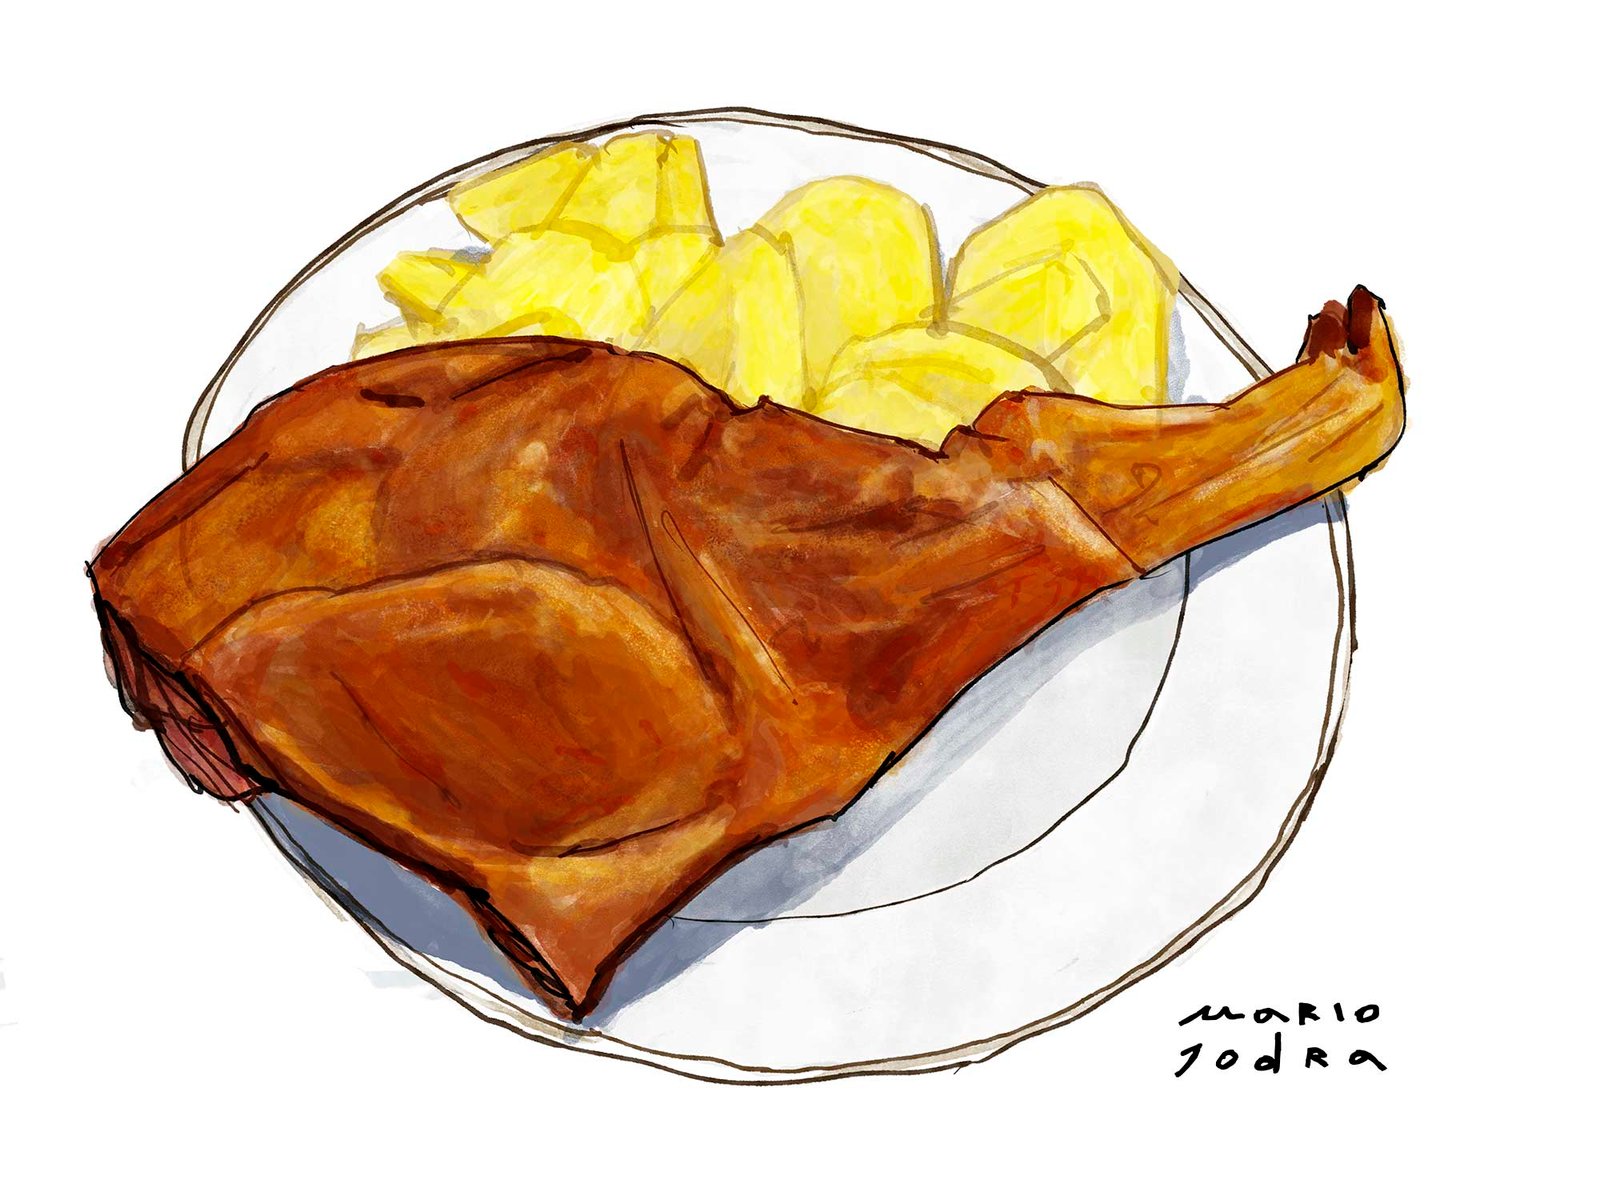 Mario Jodra illustration Art - Casa Pedro: Pata de lechón asada con patatas.